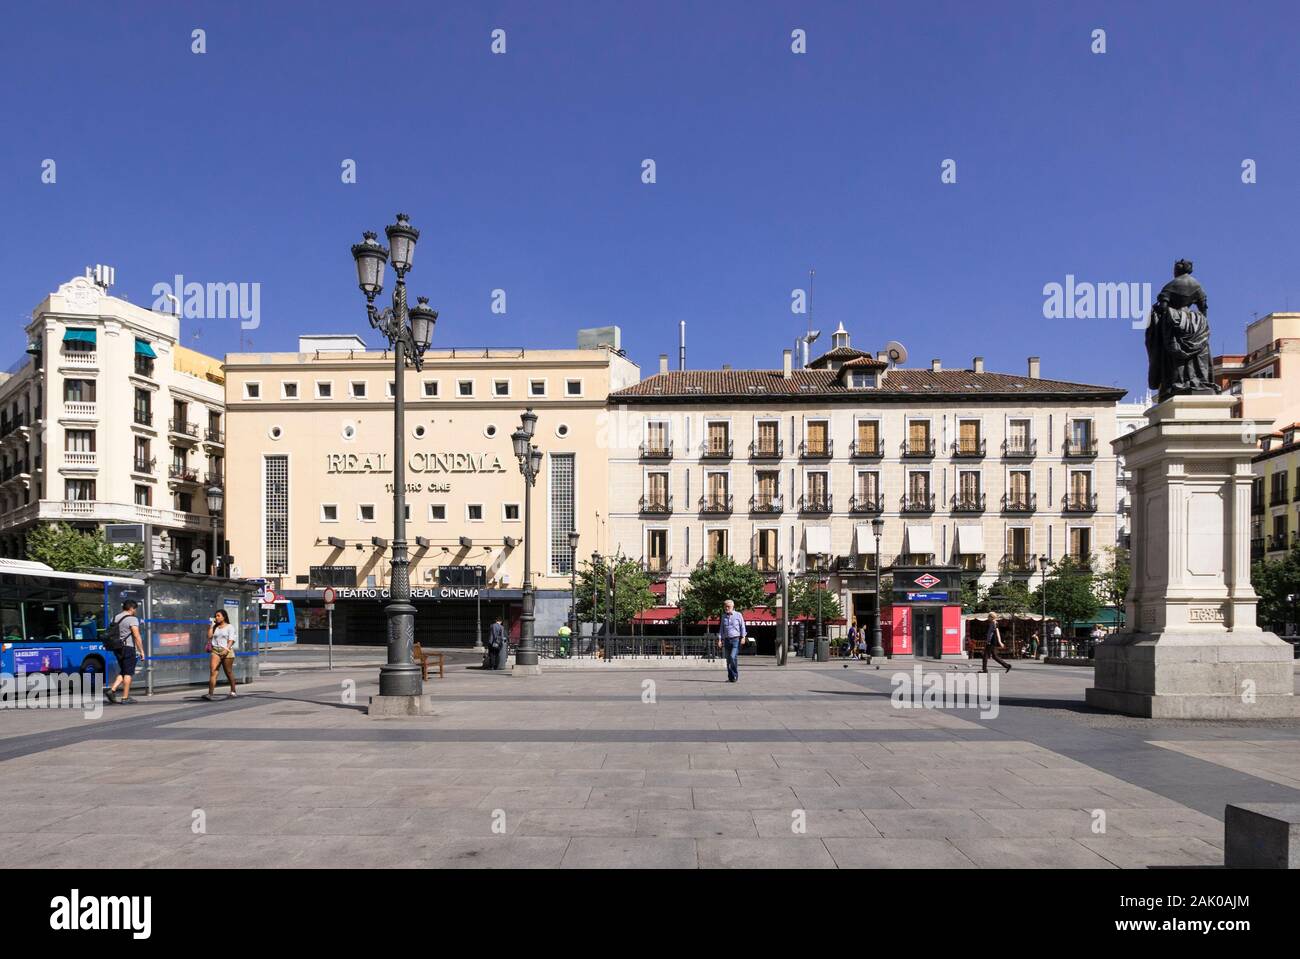 The Real Cinema in Plaza de Isabel II, Madrid, Spain Stock Photo